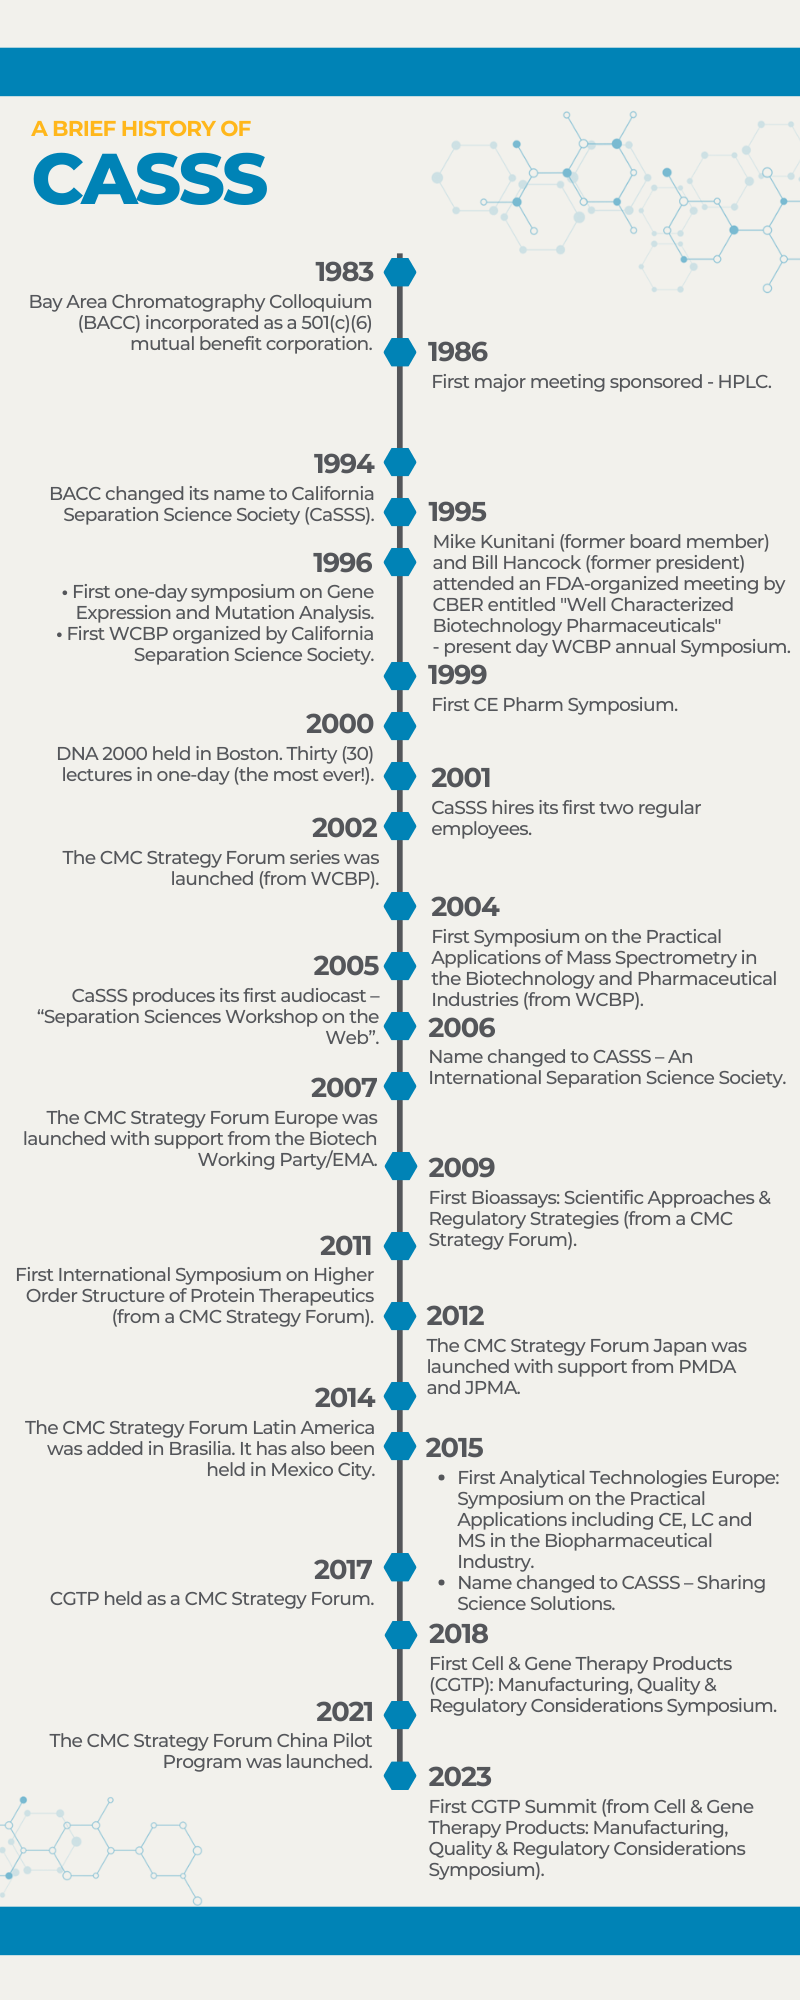 image of CASSS history timeline